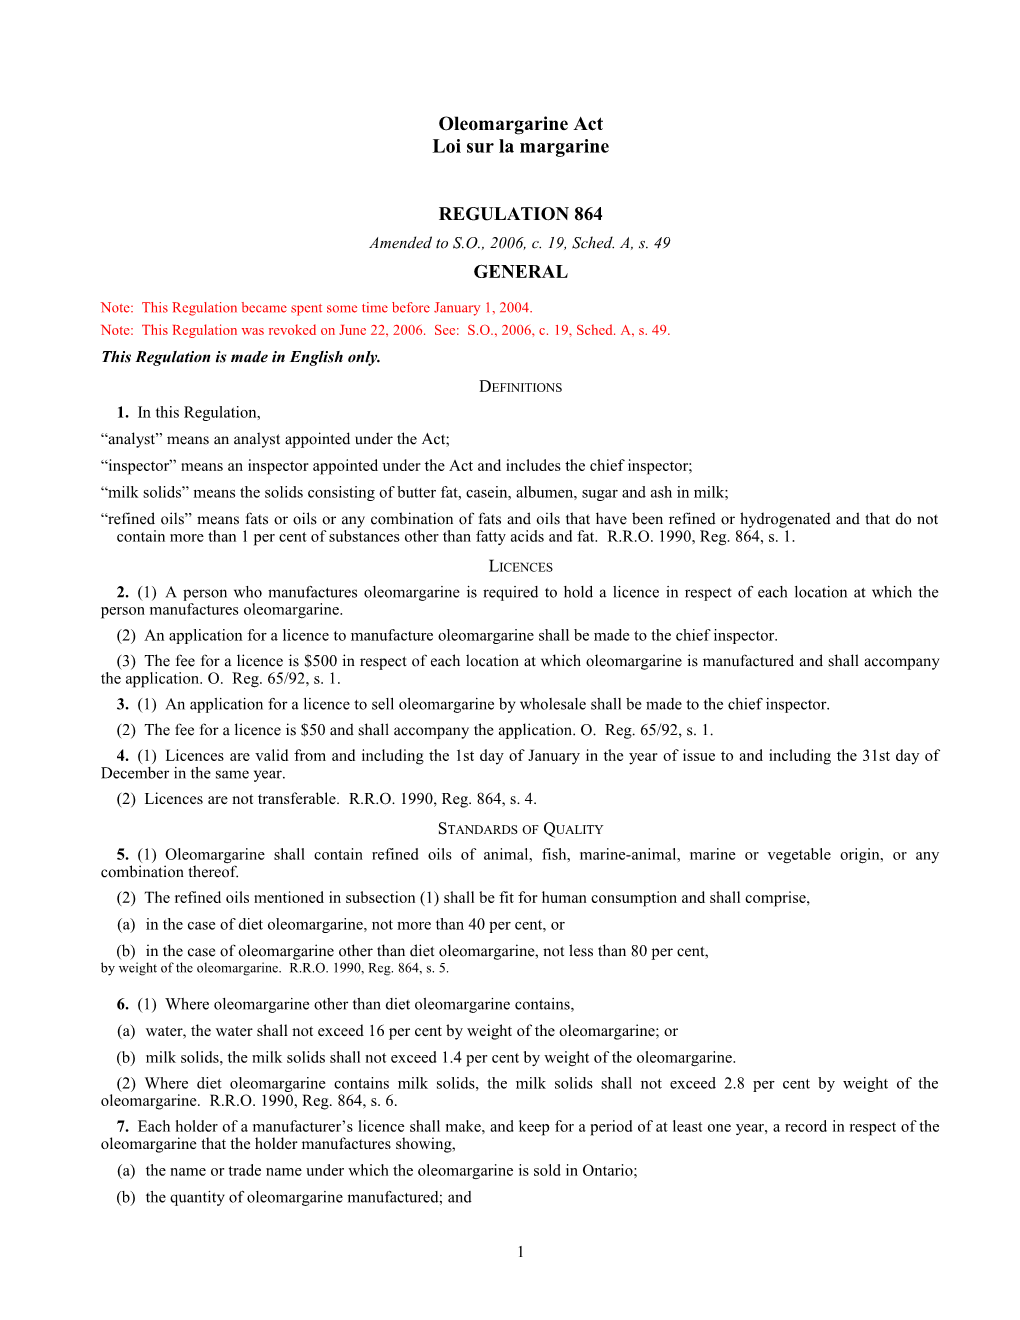 Oleomargarine Act - R.R.O. 1990, Reg. 864